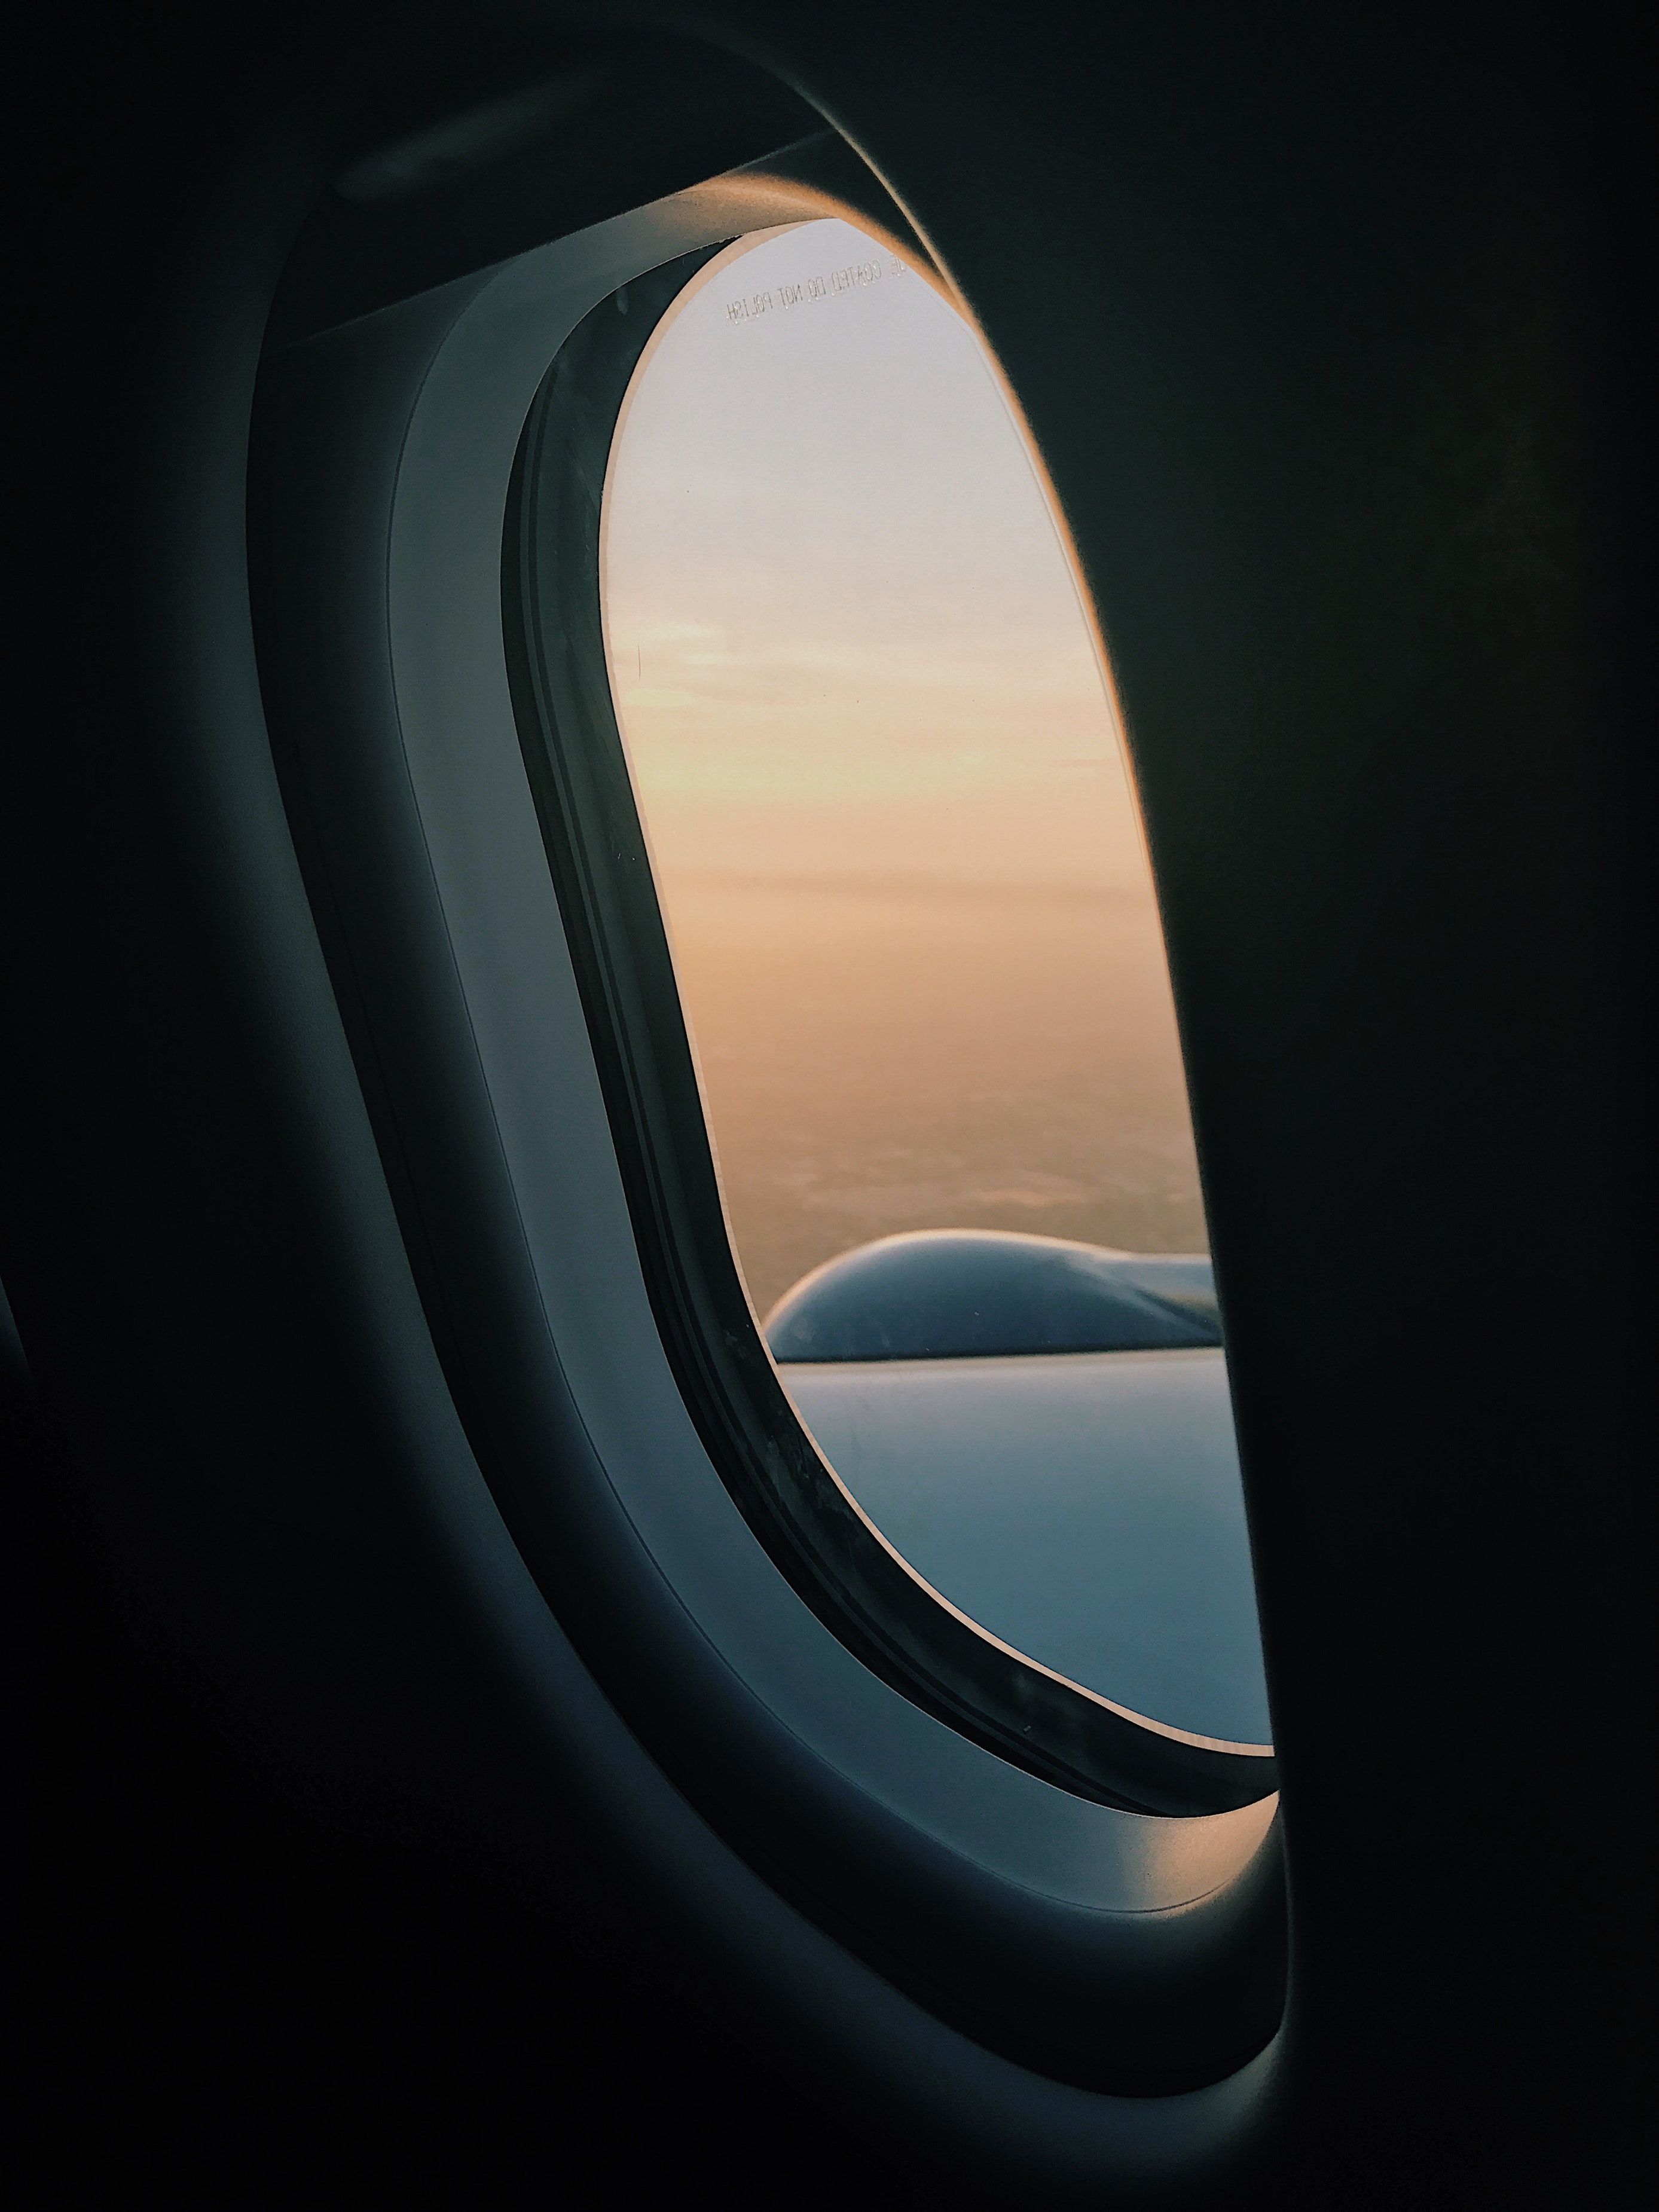 Airplane window, plane window, wallpaper, iphone wallpaper, iphone background, lock screen background, travel,. Airplane window, Plane window, iPhone wallpaper